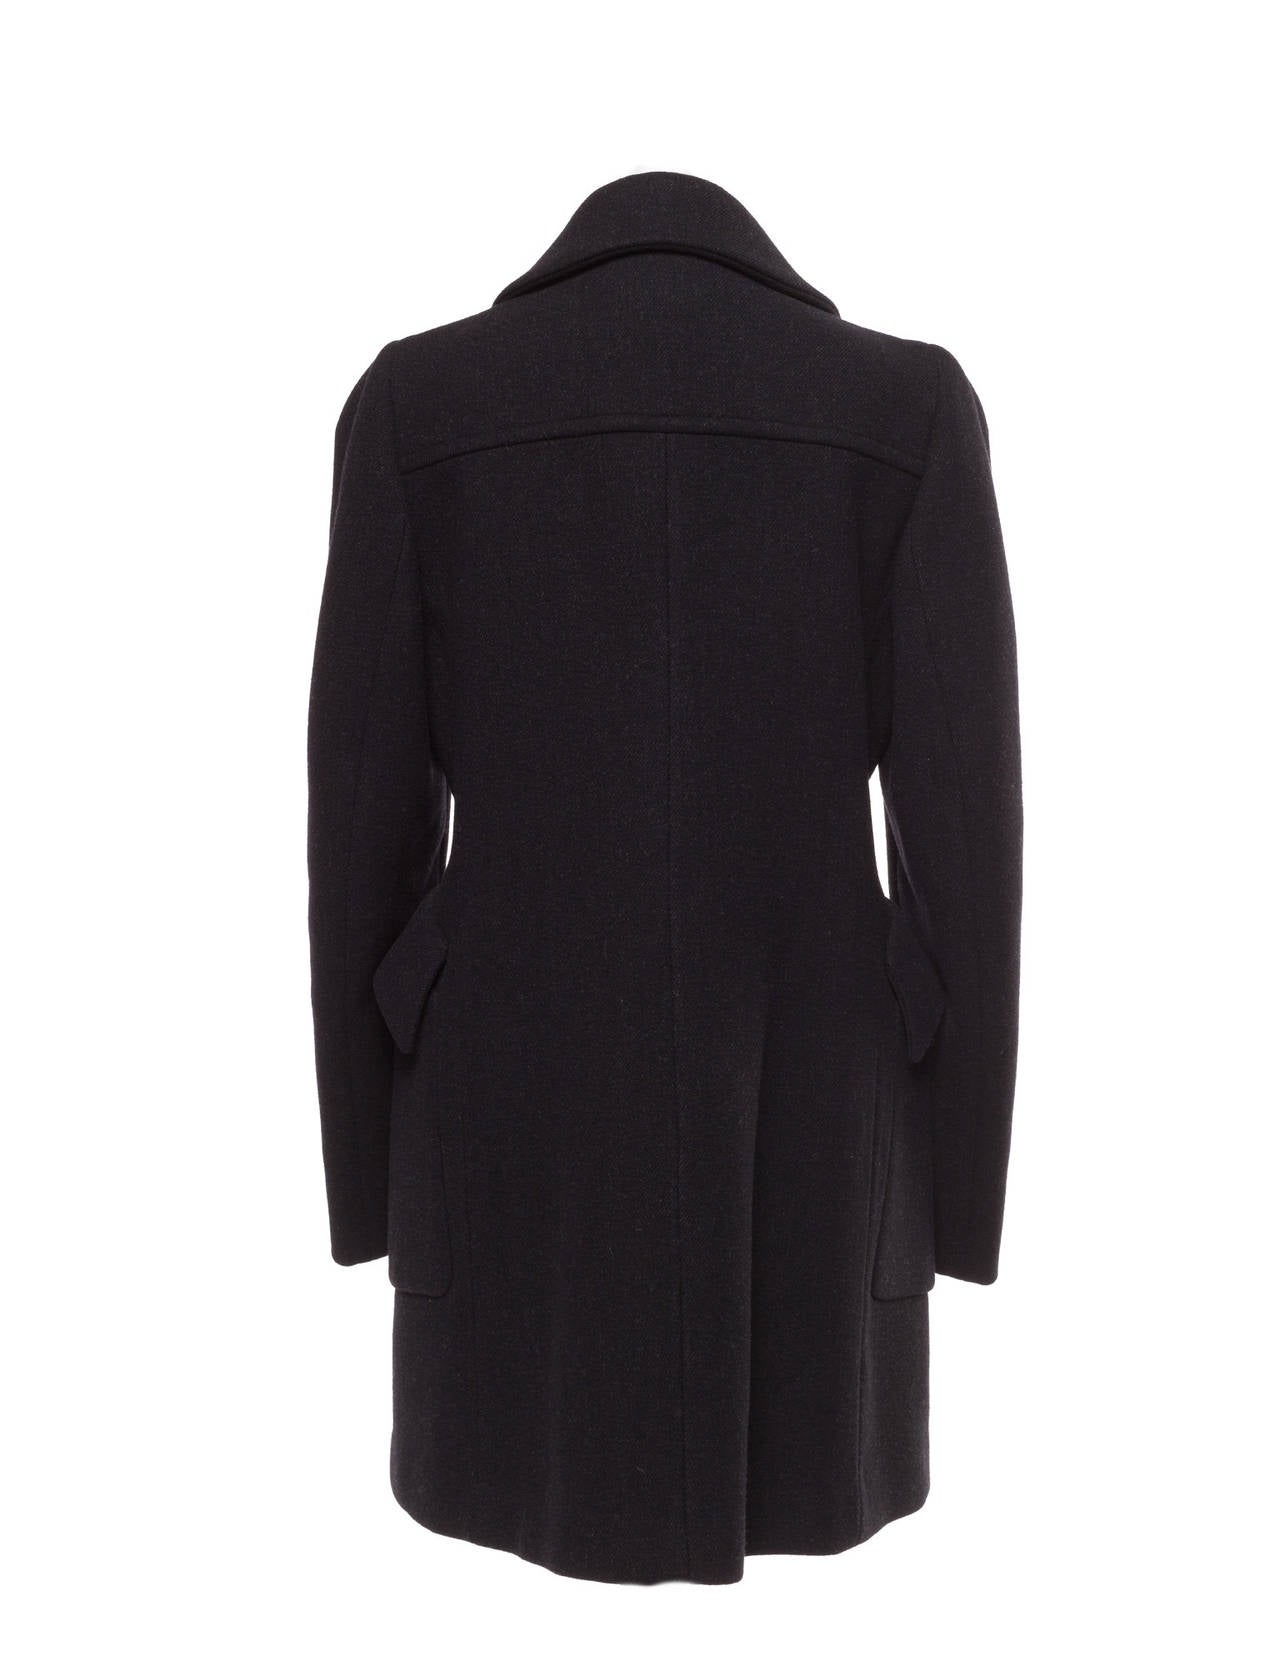 Prada minimal Wool coat with collar detail and large pockets, Sz. M 1